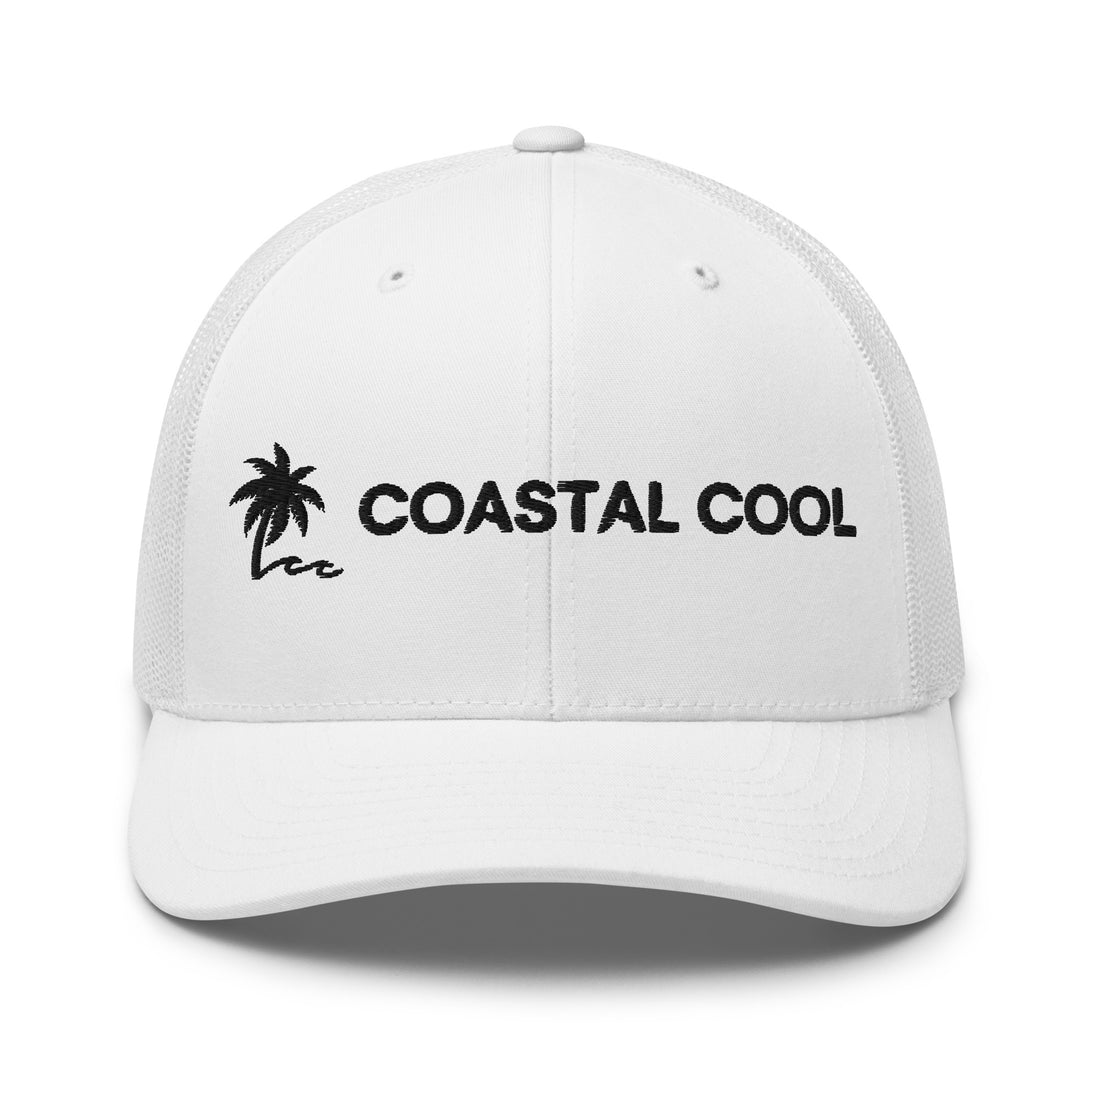 Coastal Cool Trucker Cap - White-Coastal Cool